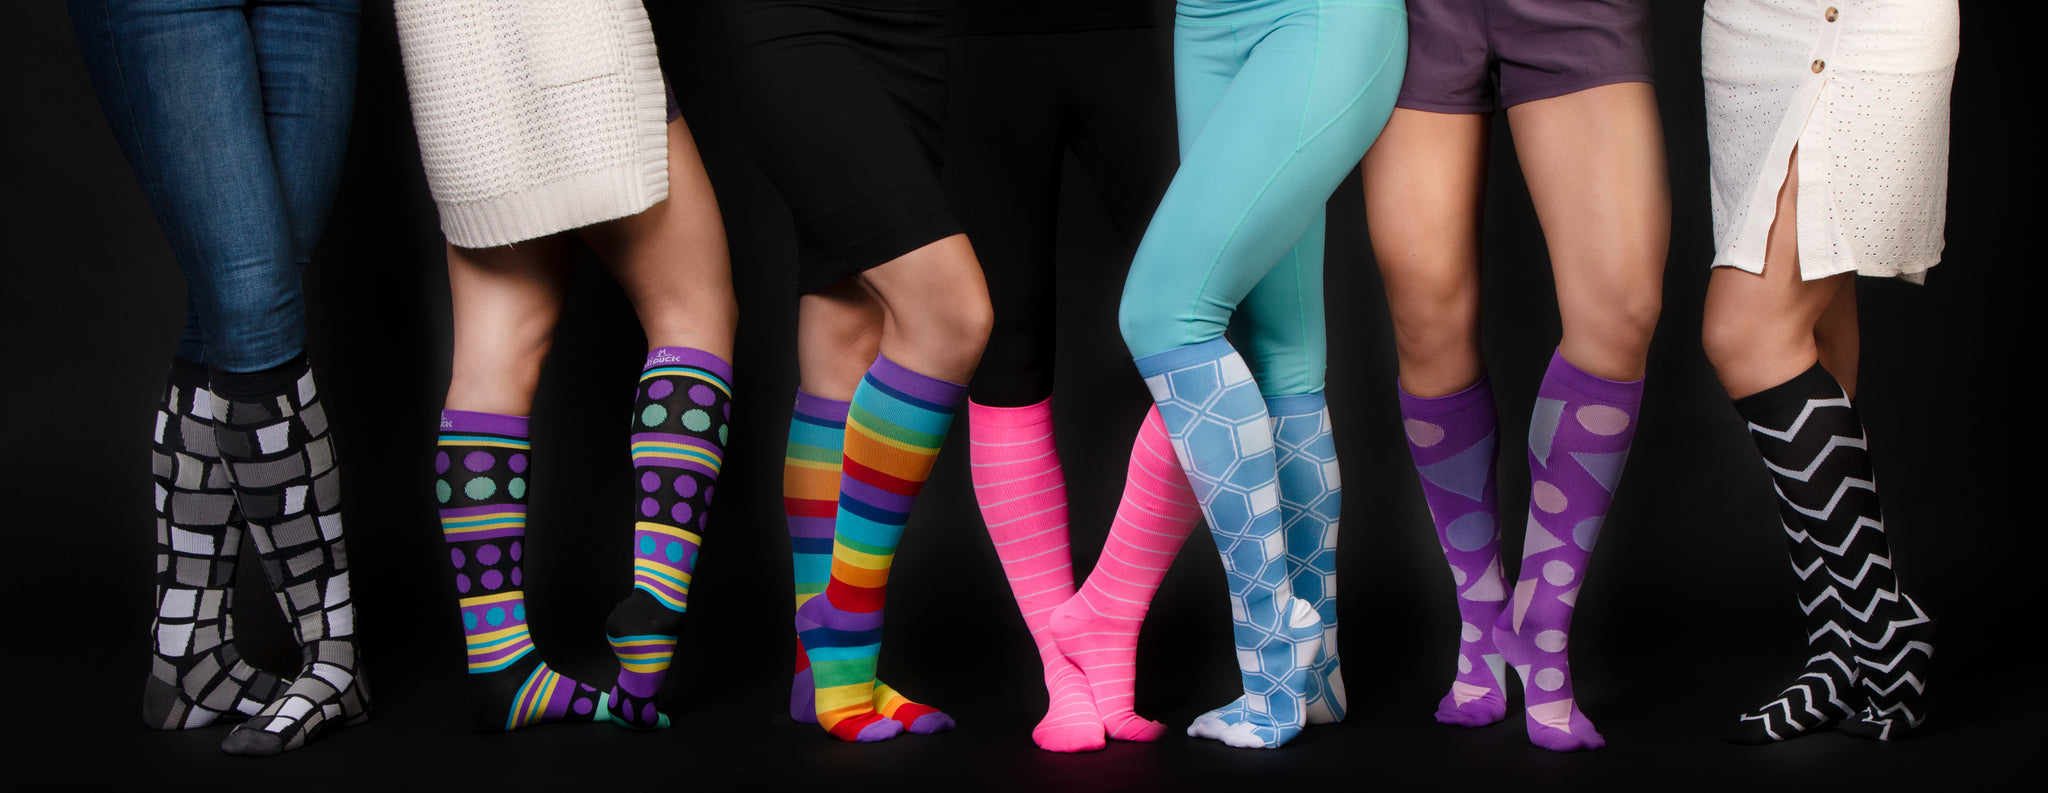 Why Should Canadians Wear Compression Socks?